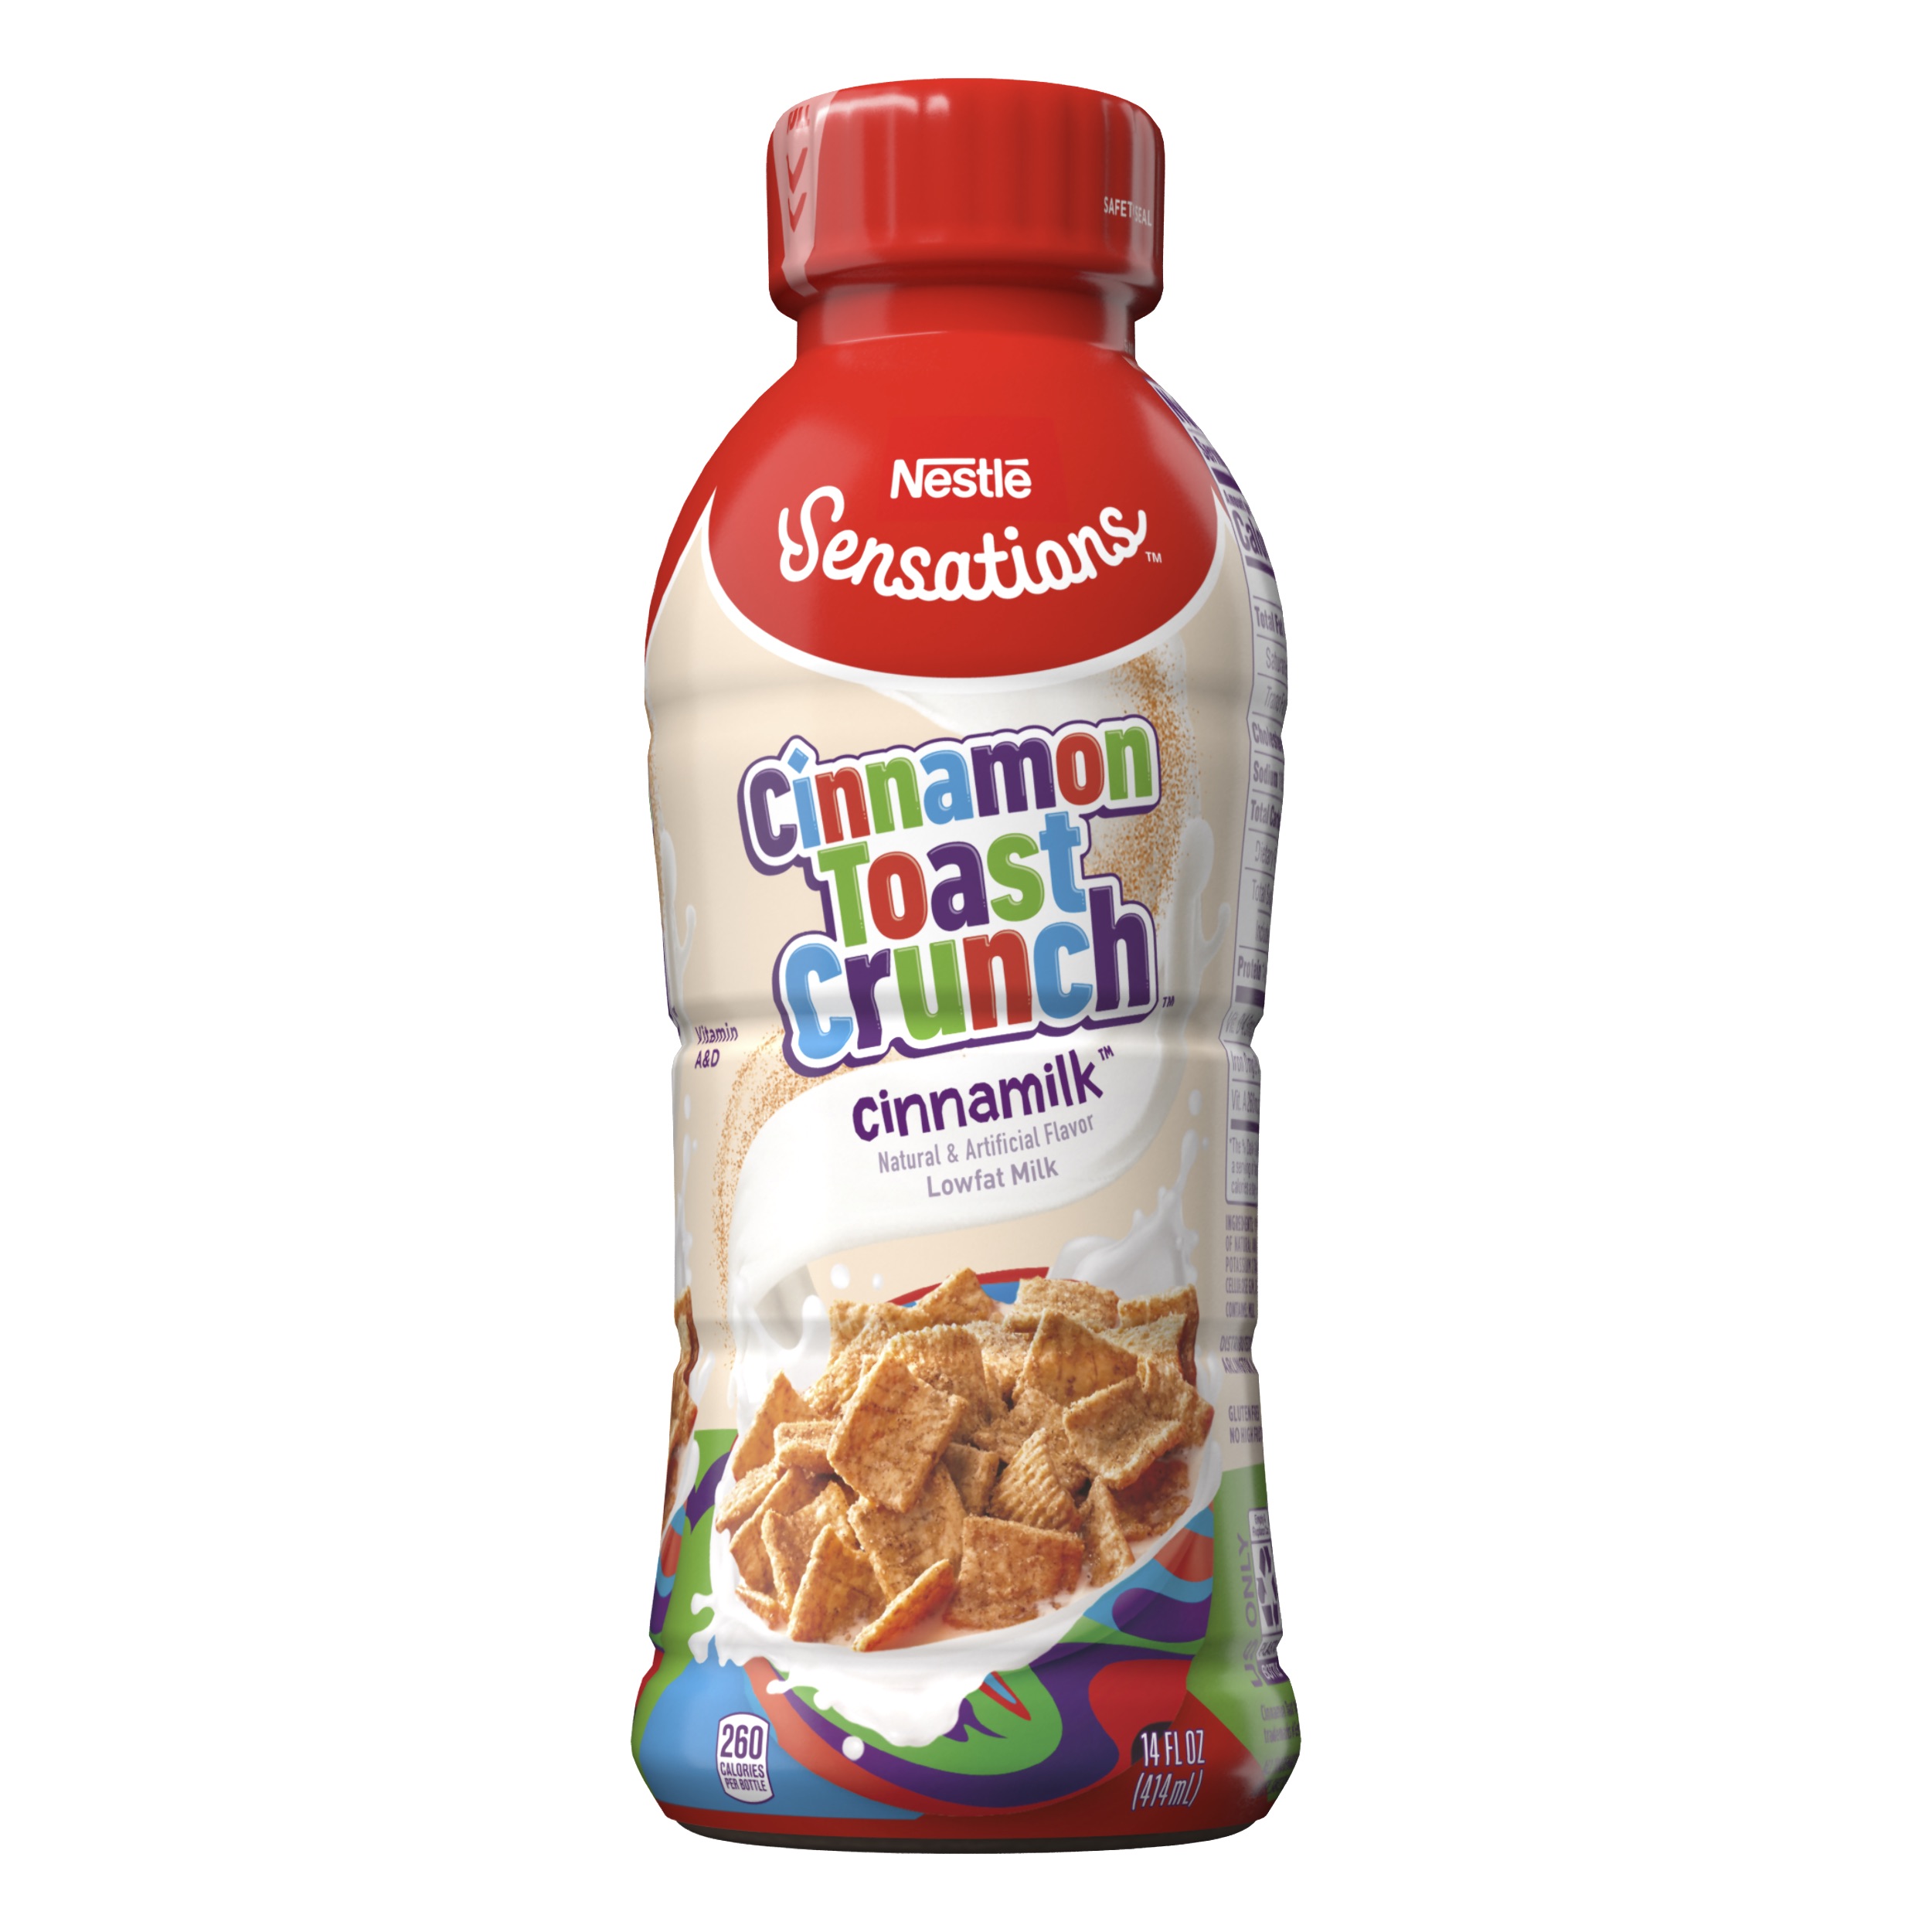 PHOTO: New Cinnamon Toast Crunch flavored cinnamilk from Nestle Sensations.